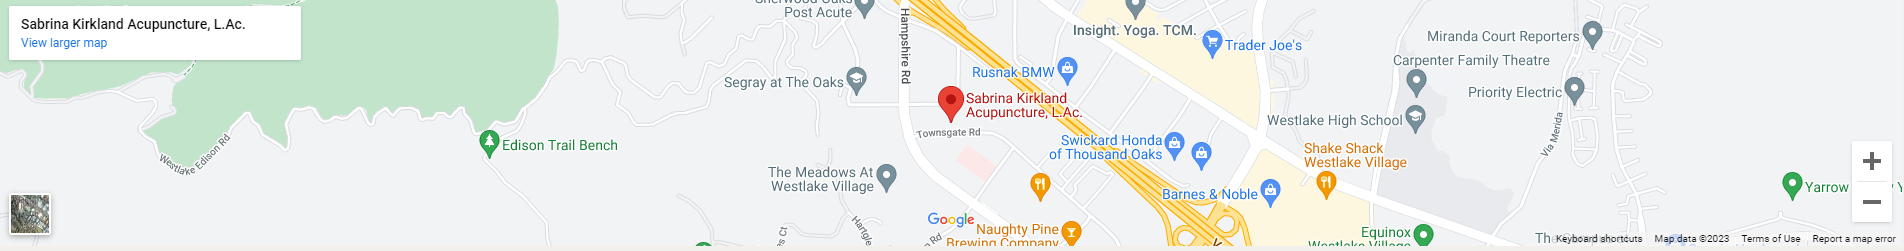 Sabrina Kirkland Acupuncture Desktop map